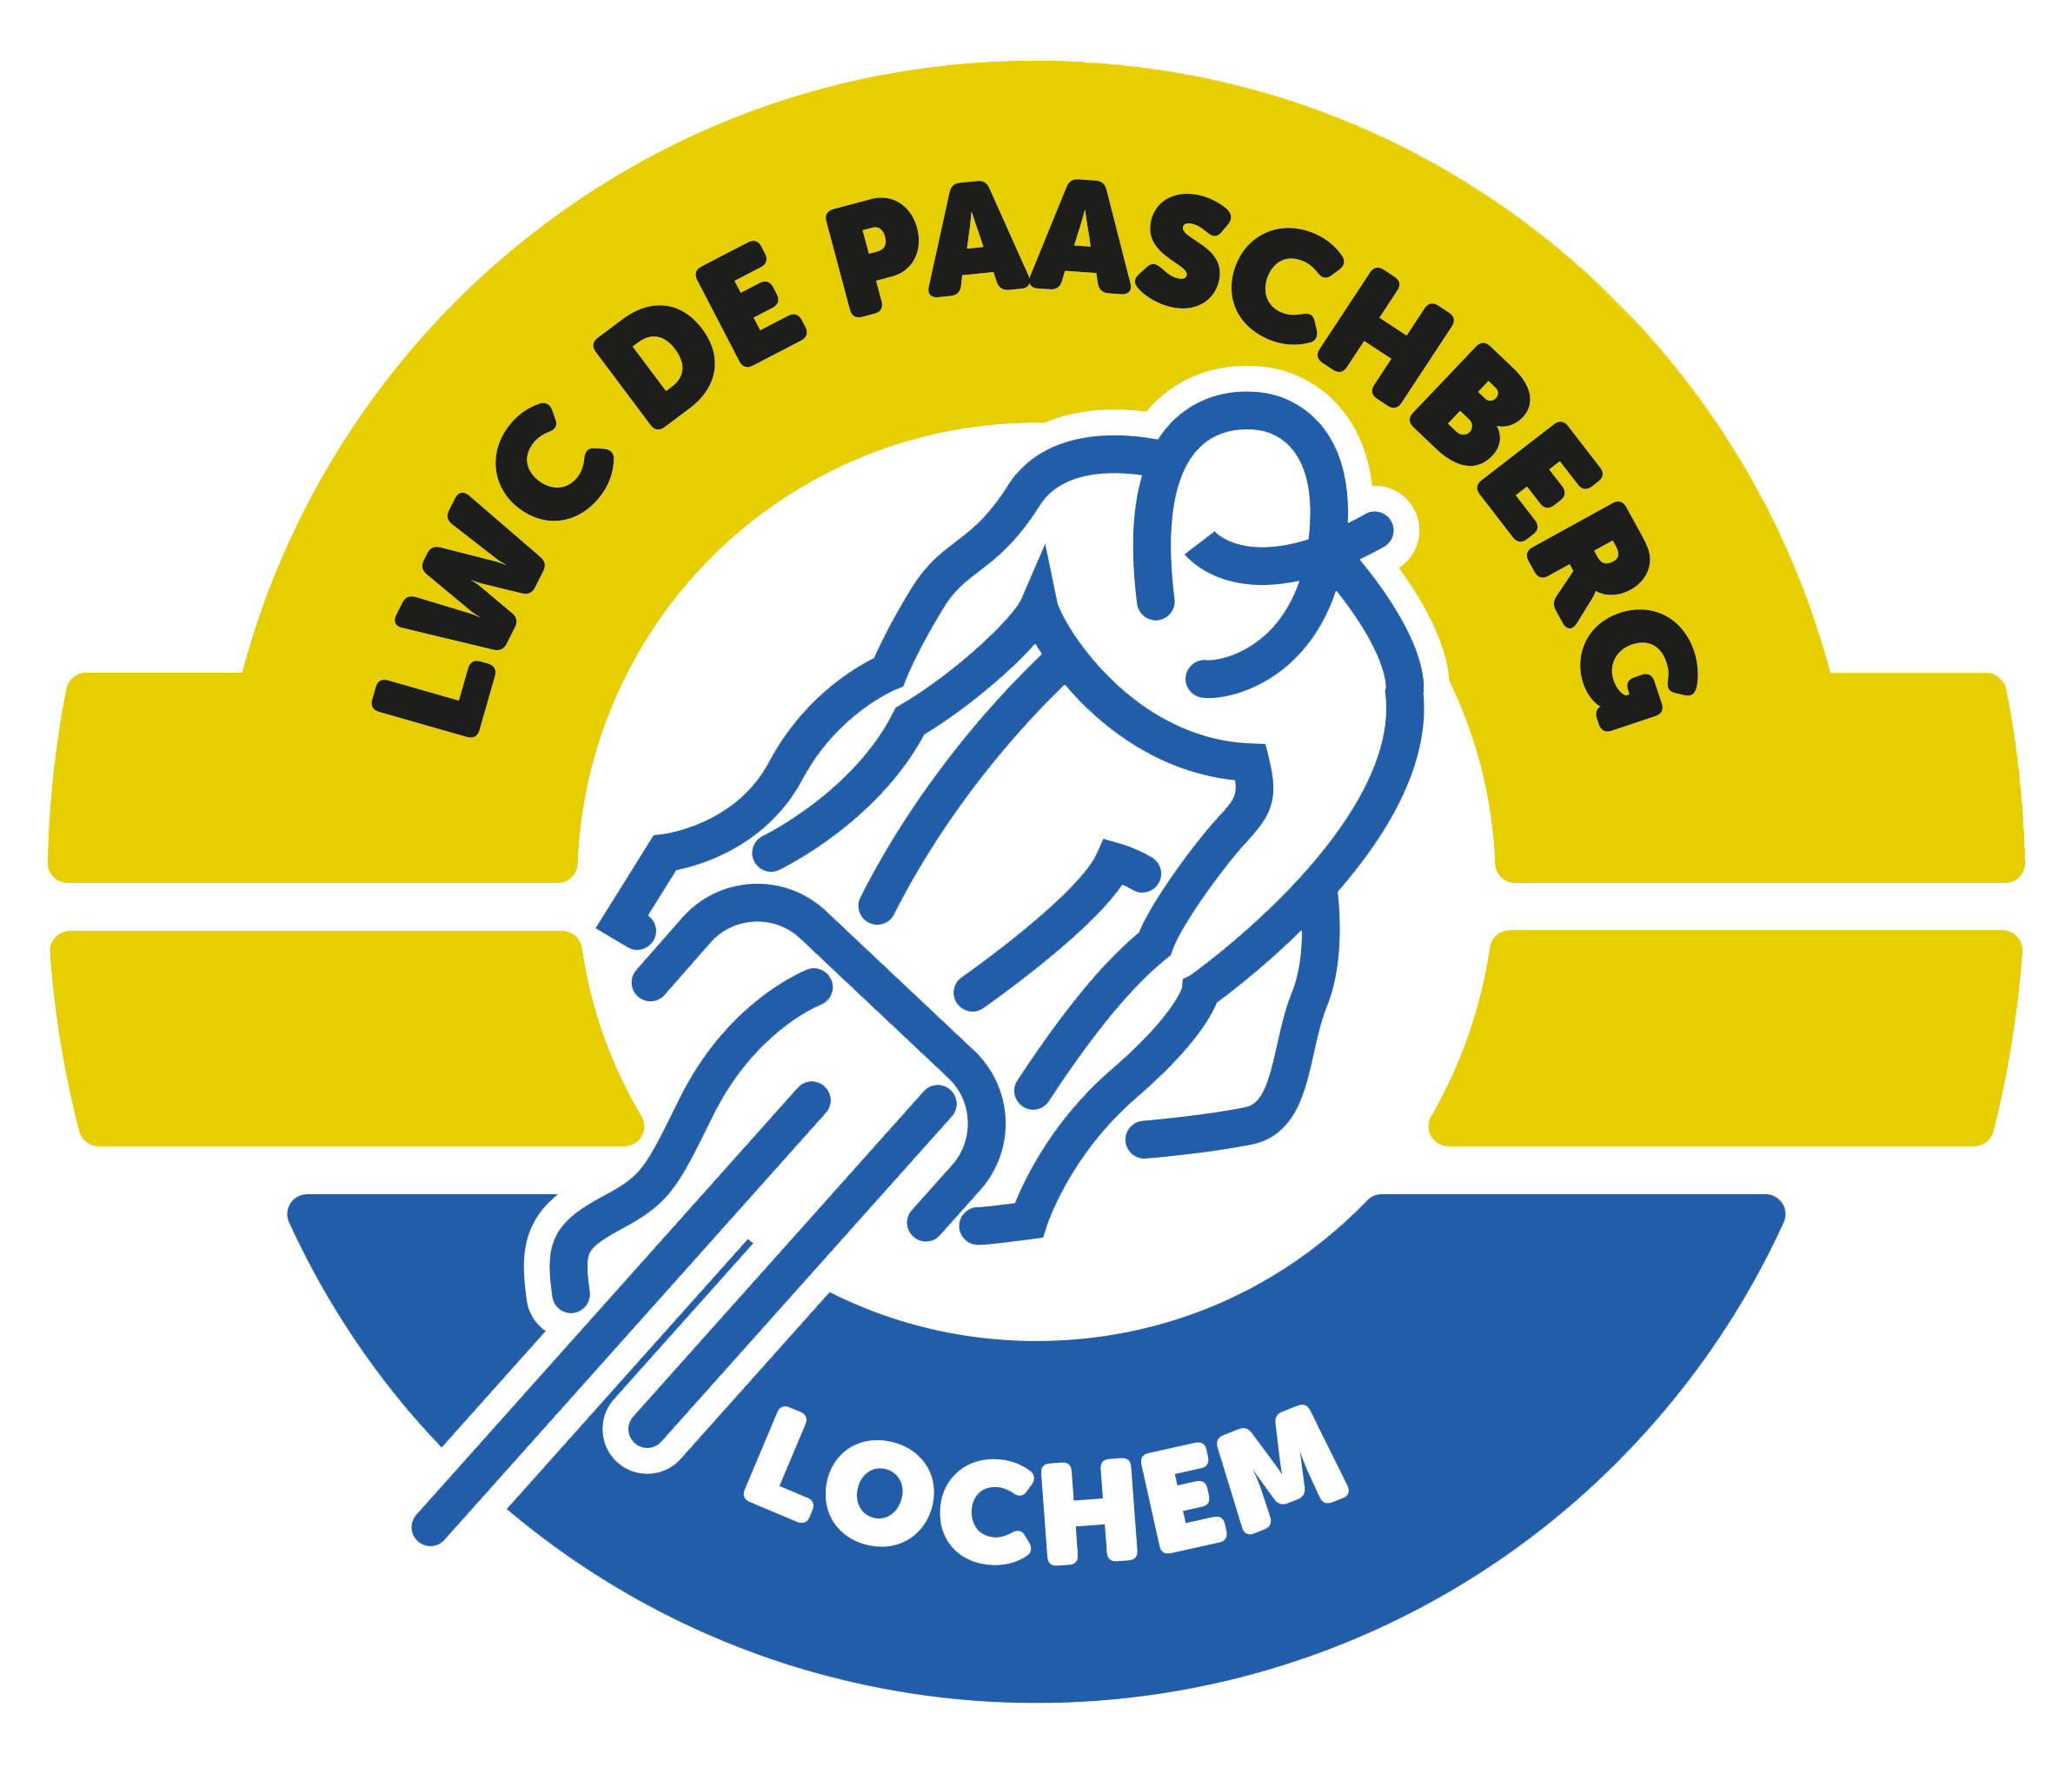 Cycling club de Paaschberg